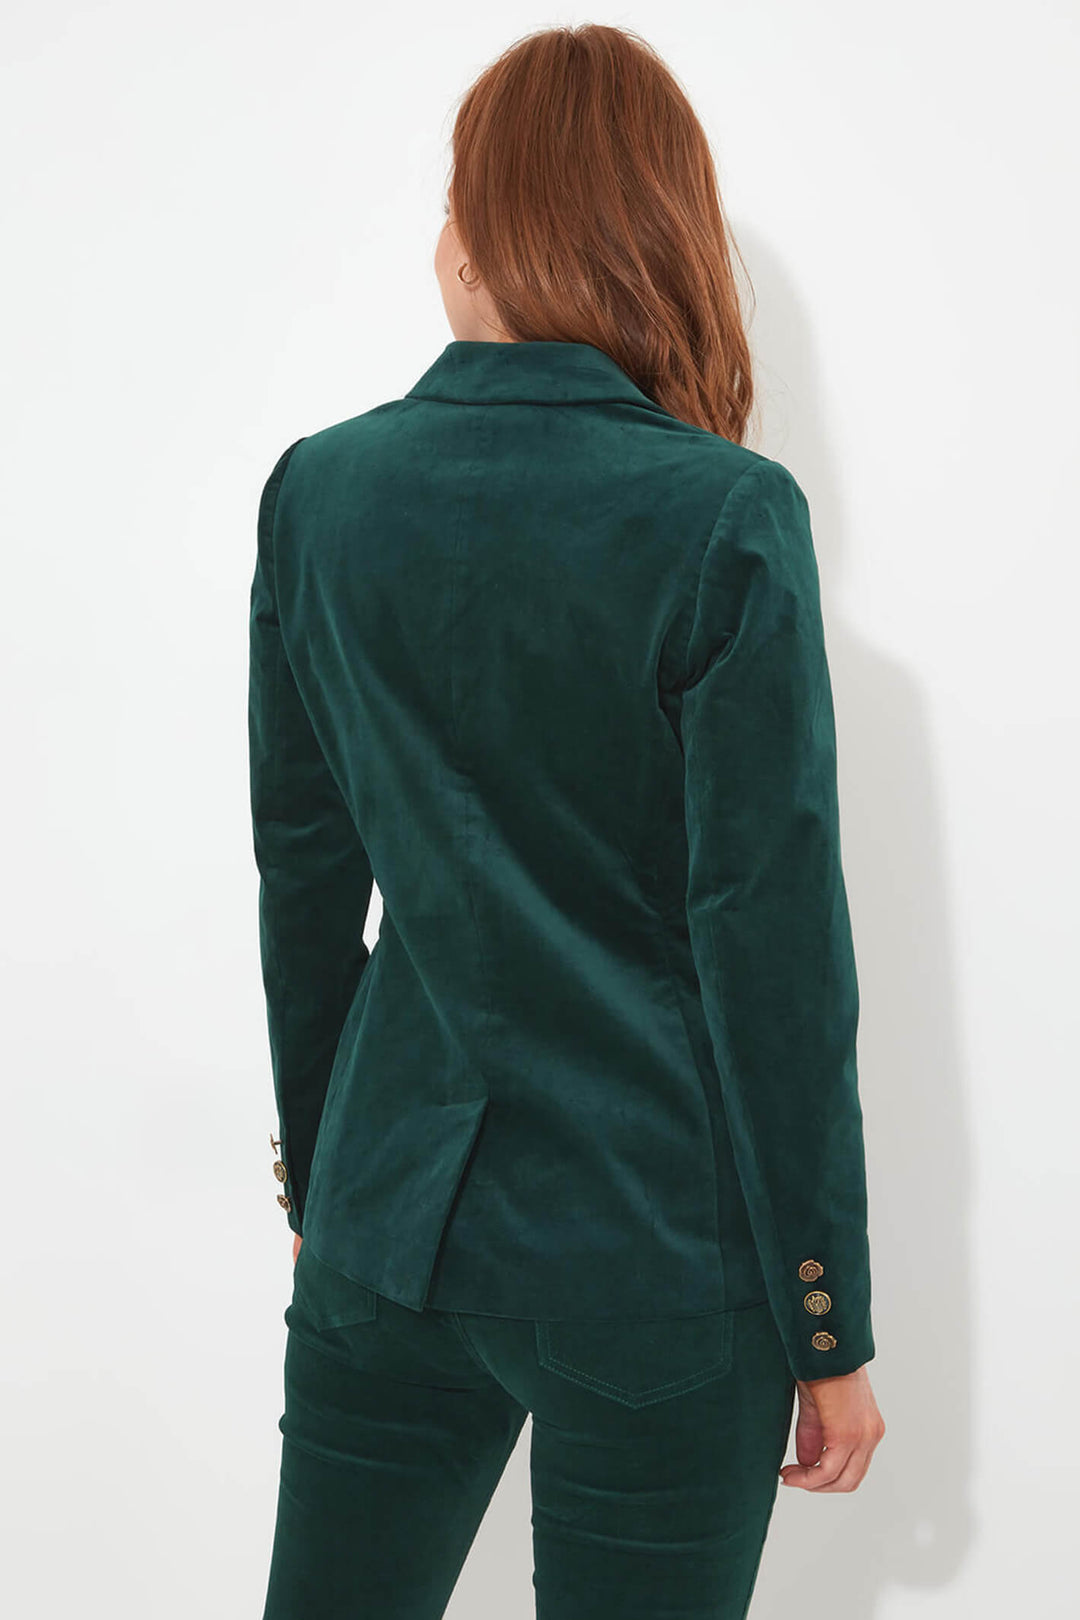 Joe Browns WJ607 Teal Green Magnificent Moleskin Jacket - Experience Boutique